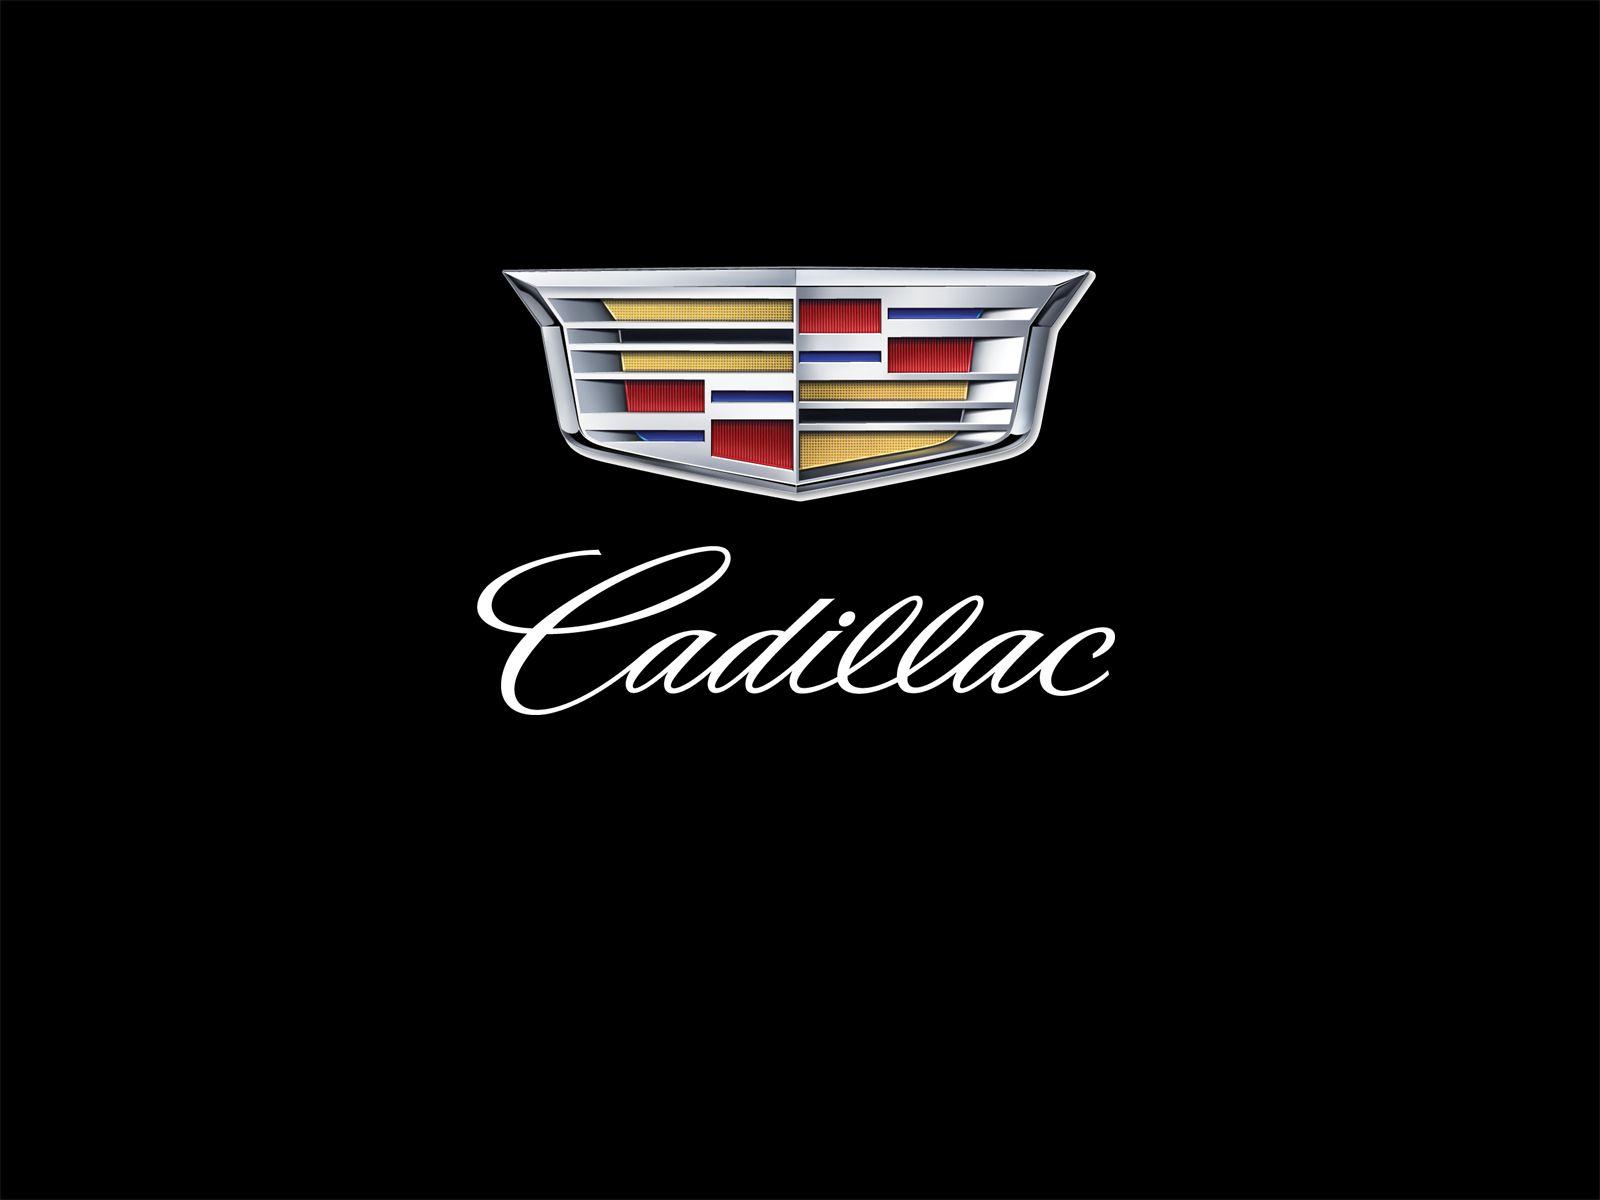 2016 New Cadillac Logo - New cadillac Logos